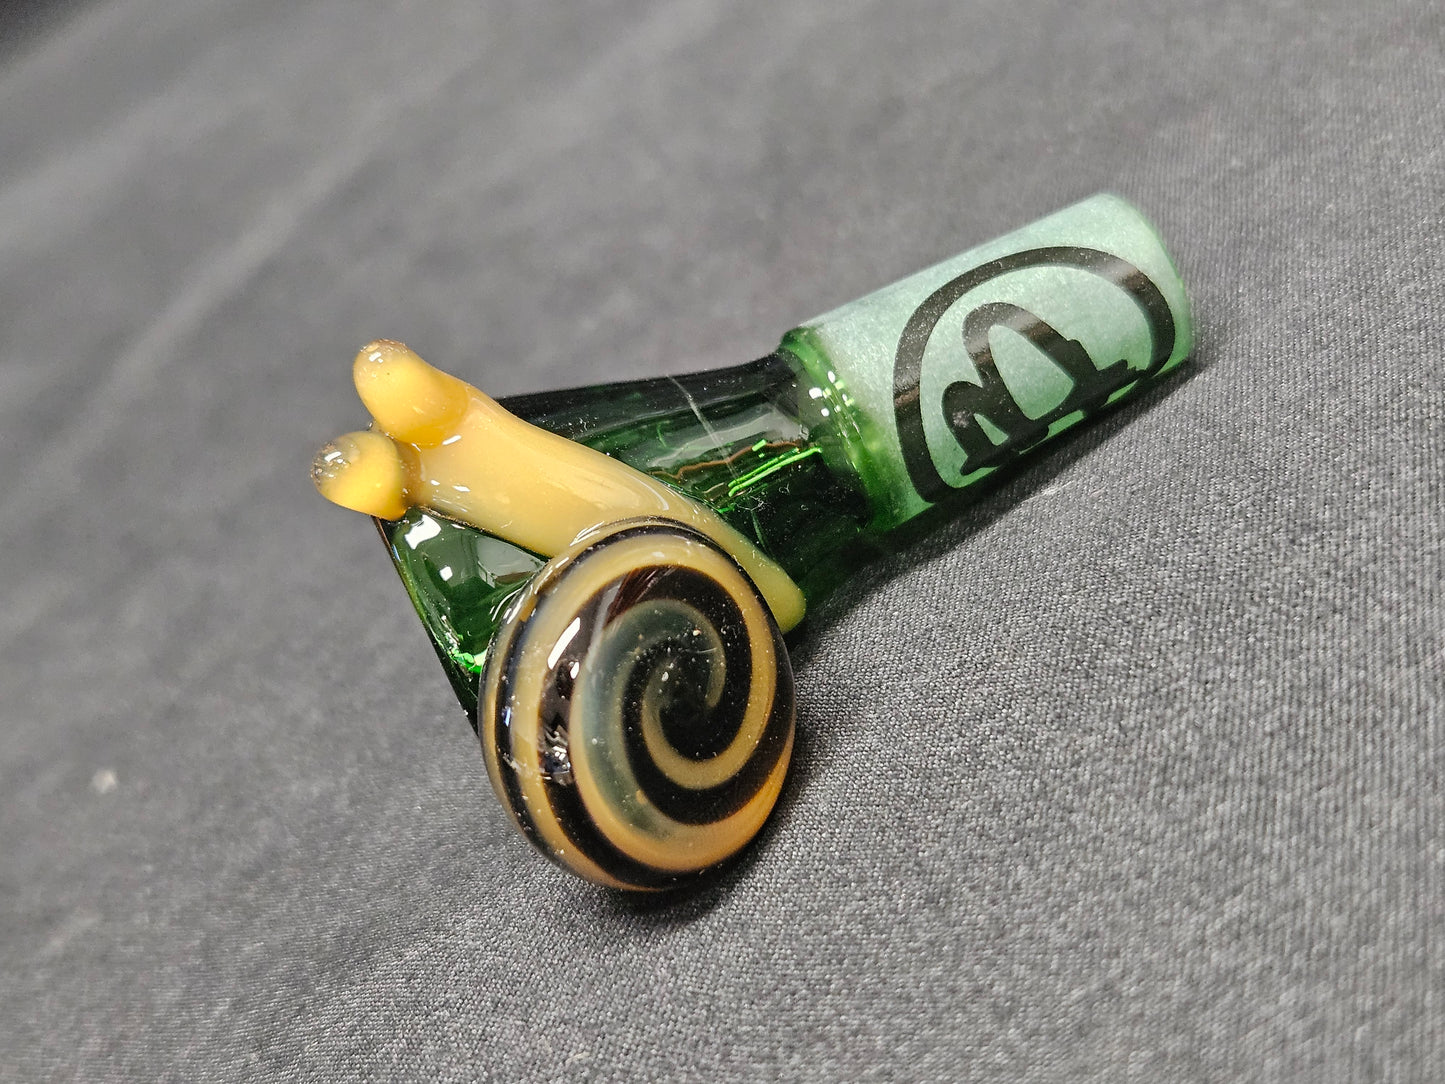 14mm snail